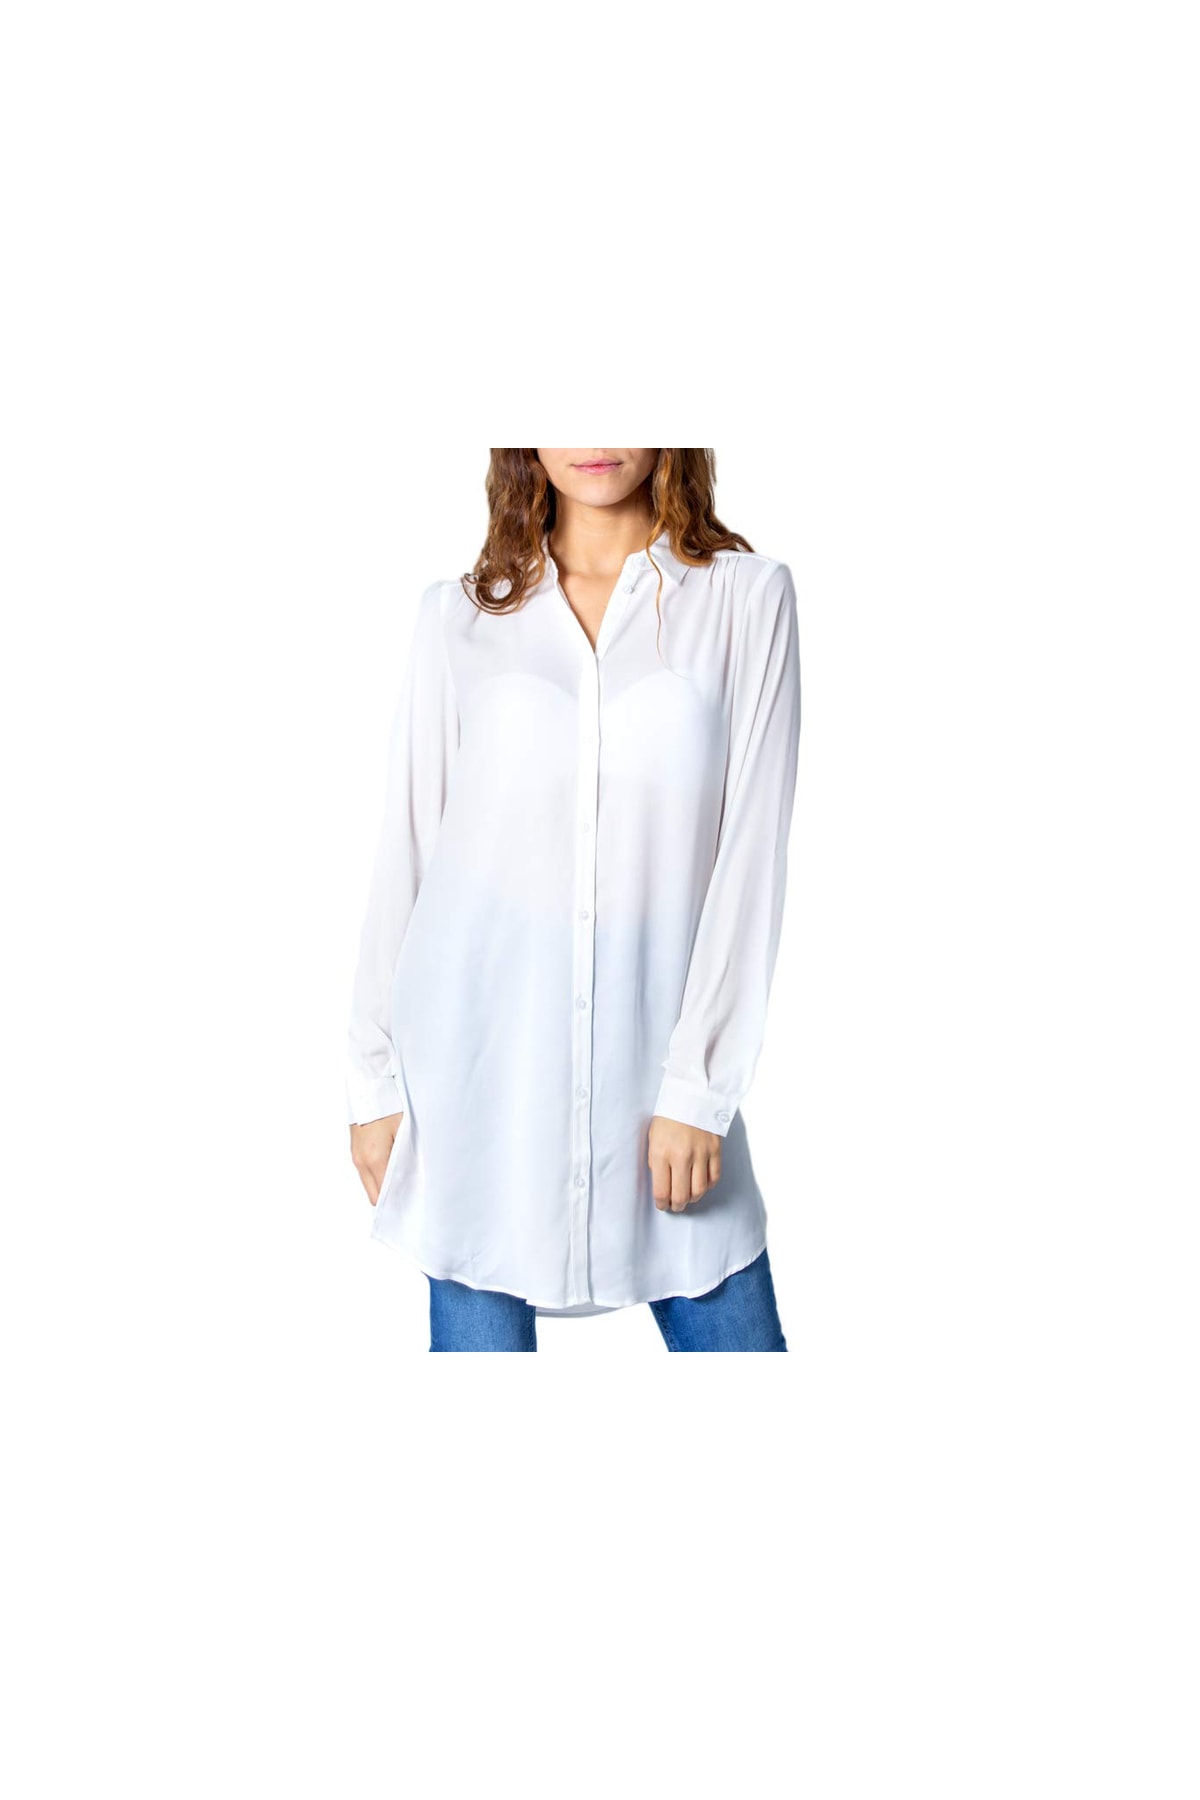 VILA Bluse Weiß Regular Fit Fast ausverkauft